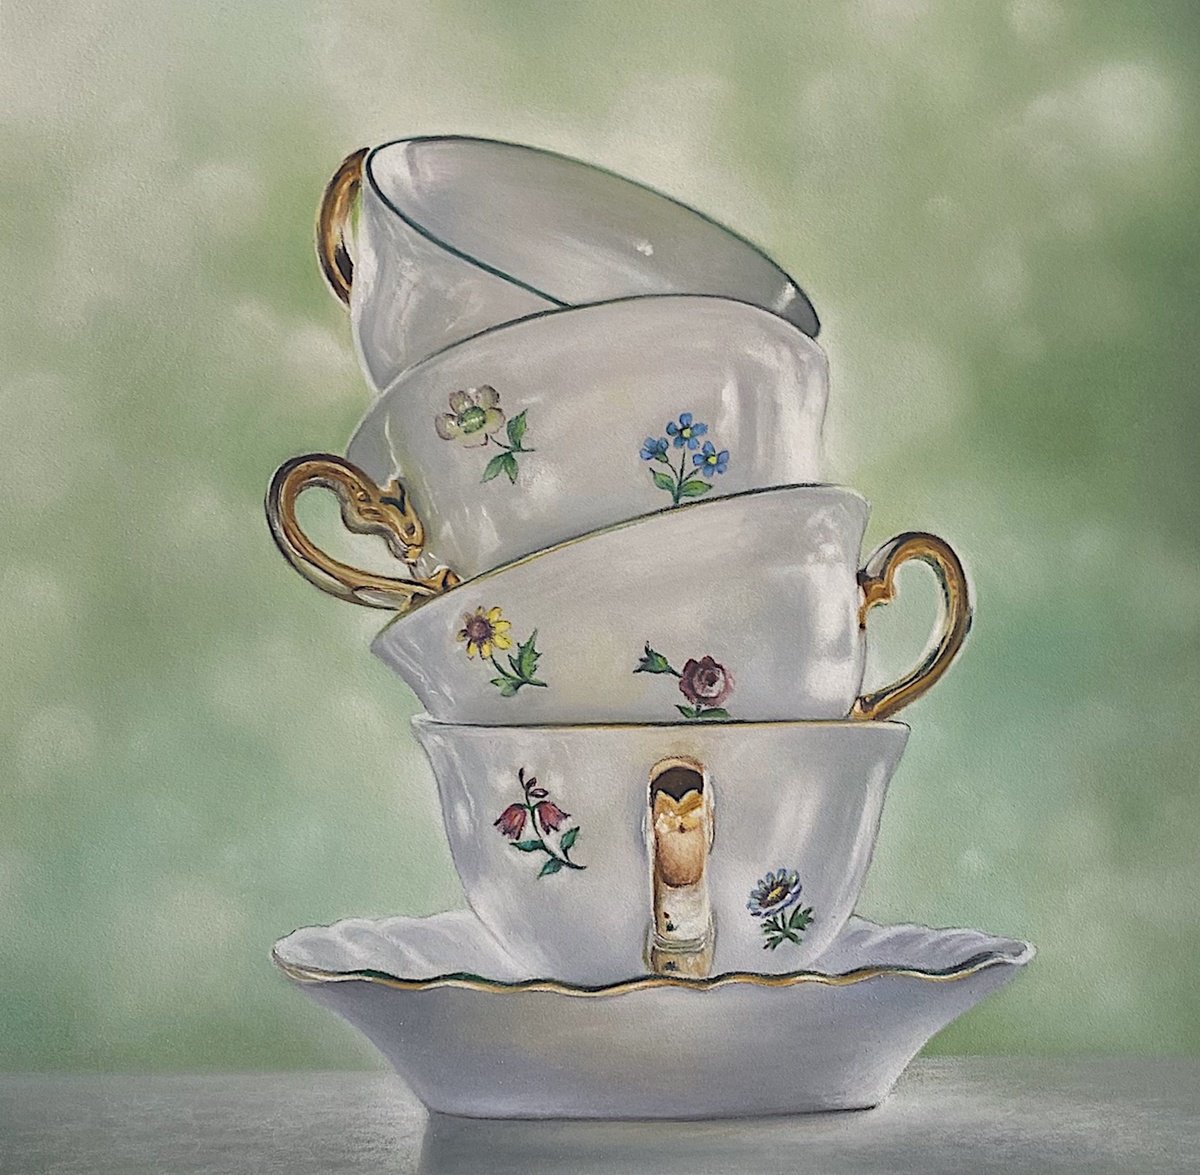 ’Floral Tea’ by Debra Spence